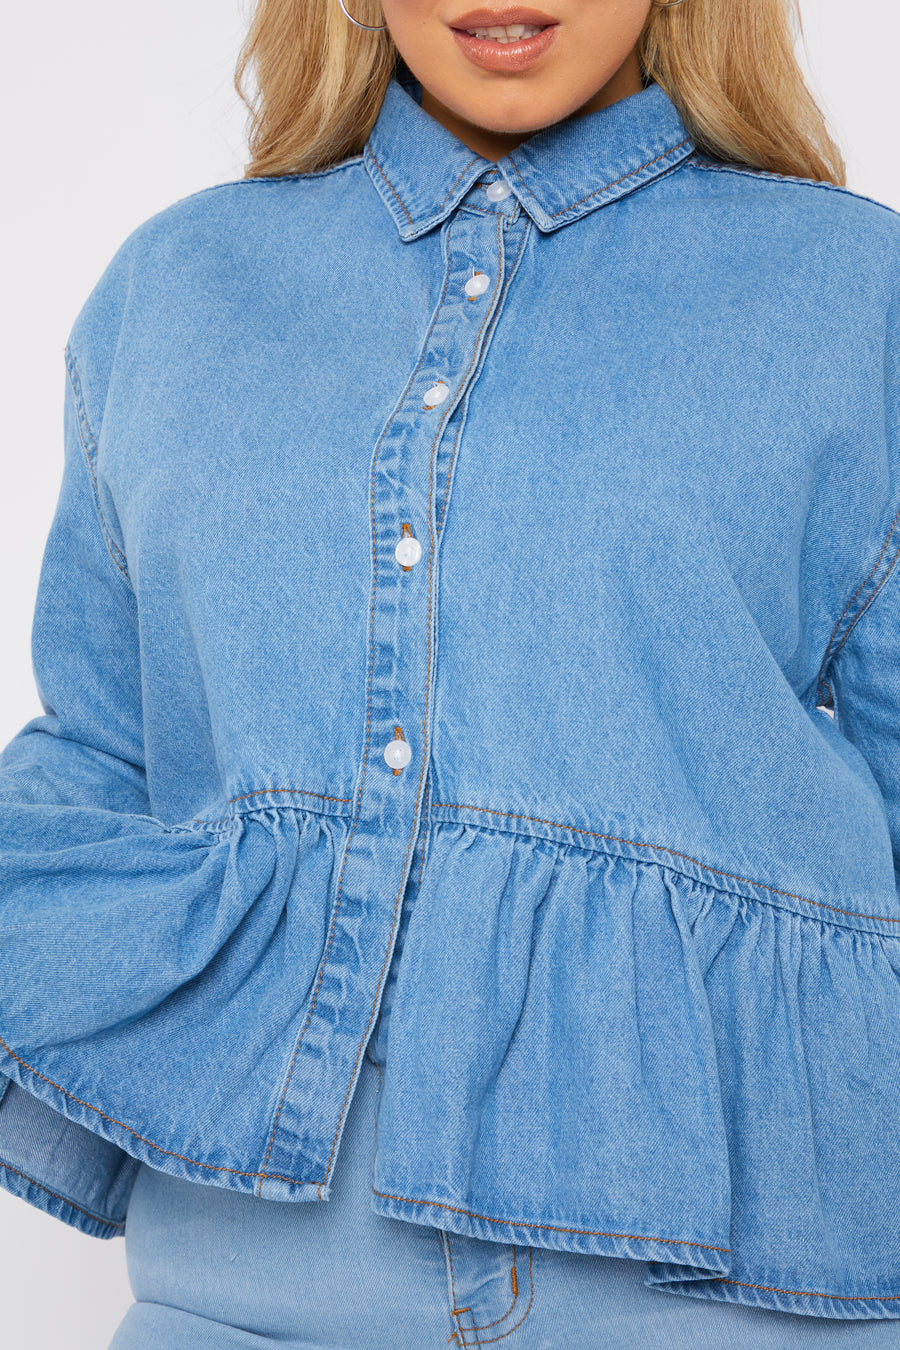 Close up product detail shot of a standing plus size female model wearing a JMOJO Light Blue Wash Peplum Denim Frill Shirt